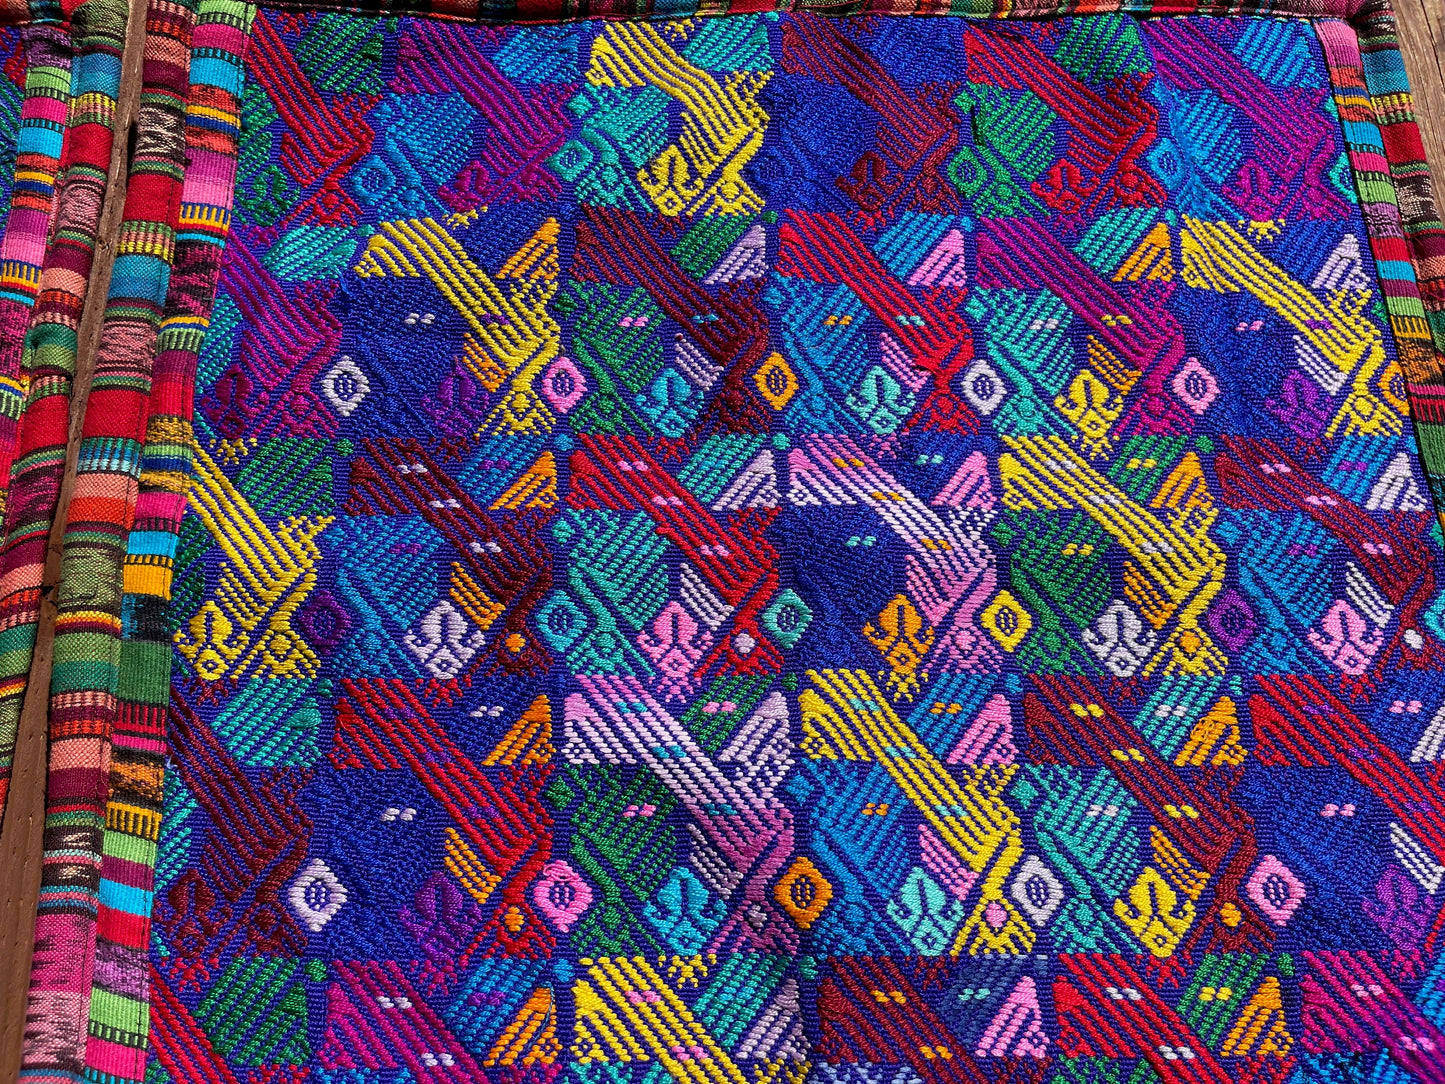 Guatemalan Huipil pillow covers from Concepcion Chiquirichapa